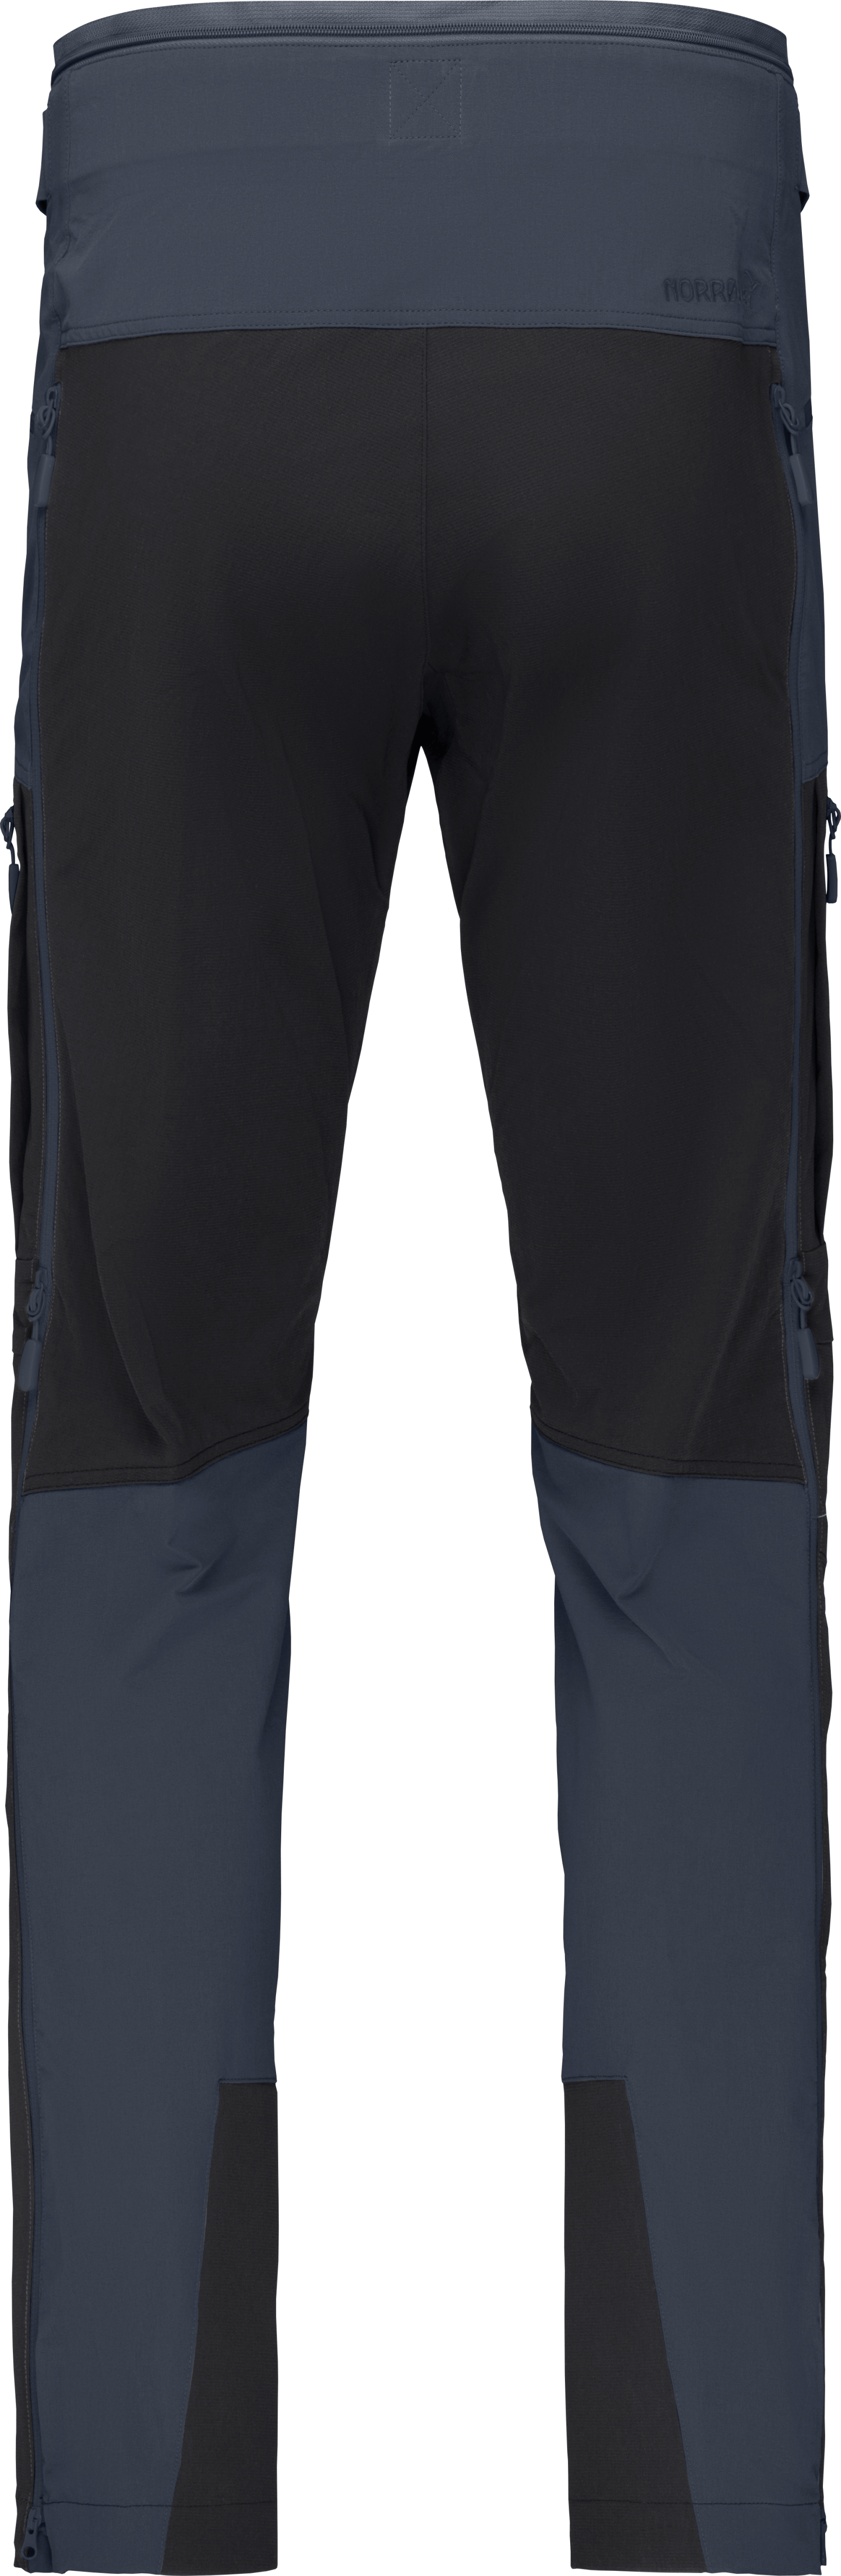 Seeland Venture Pants - Waterproof trousers Men's, Free EU Delivery